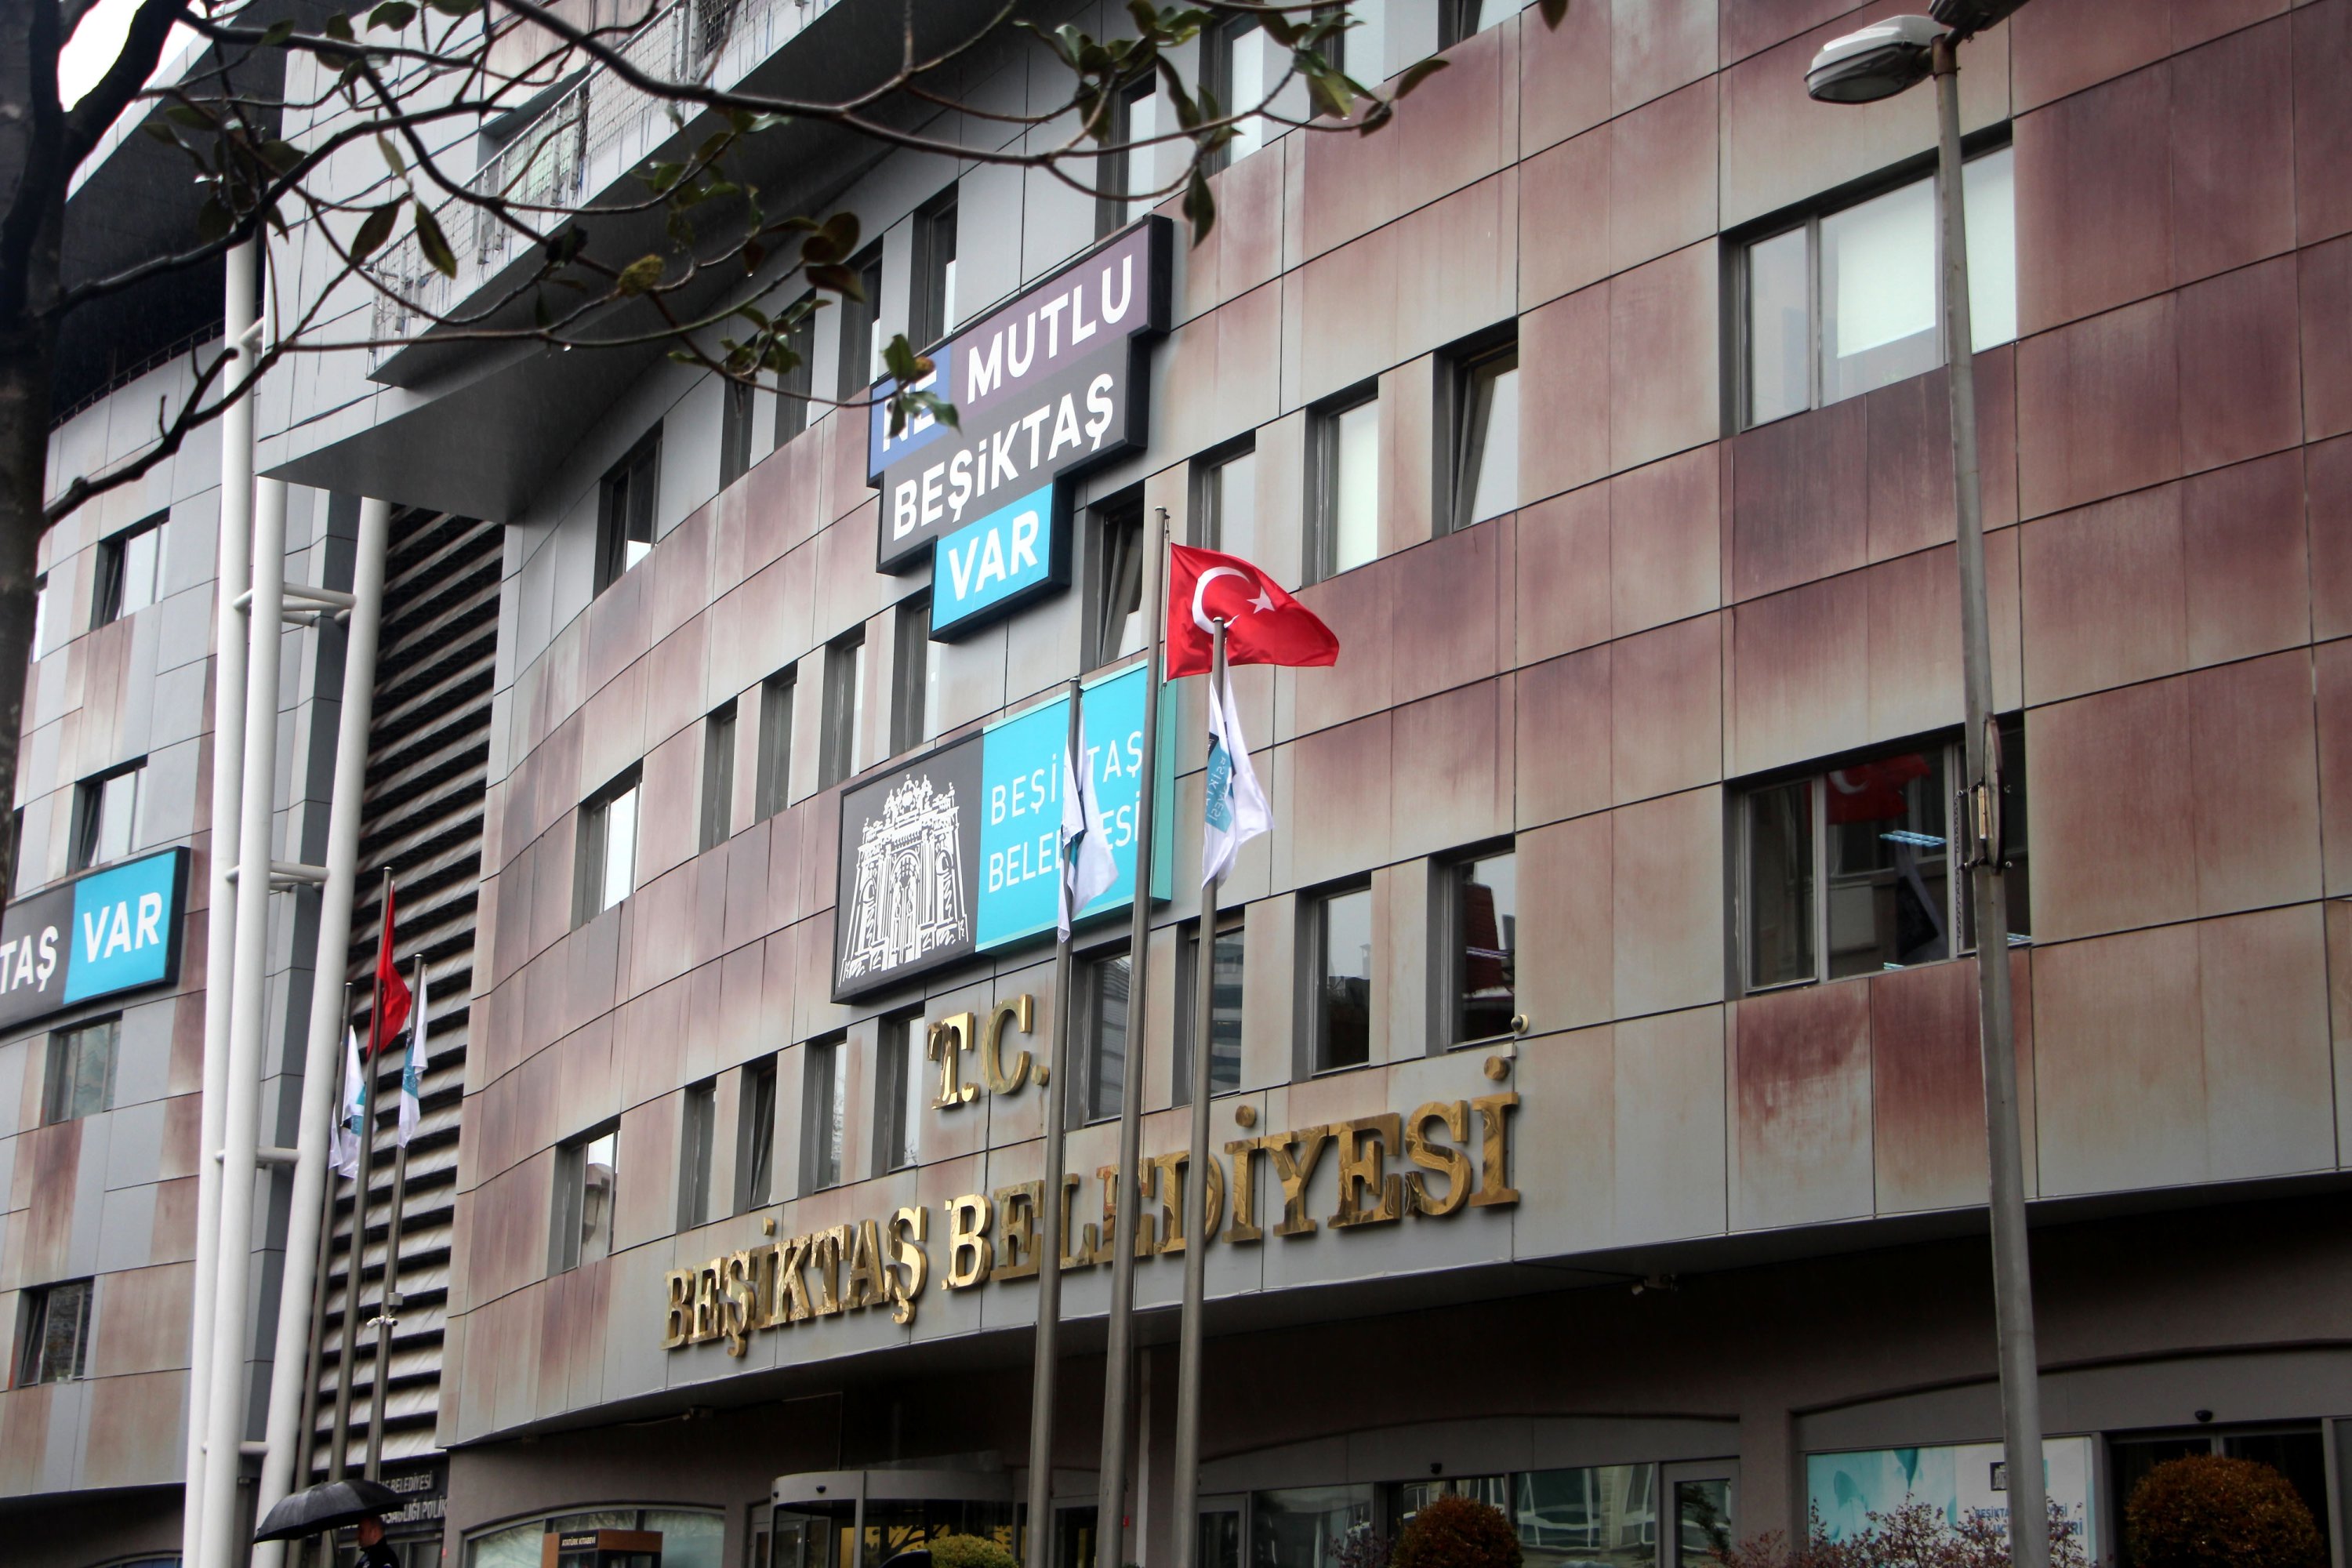 Former mayor wanted in corruption probe in Istanbul’s Beşiktaş